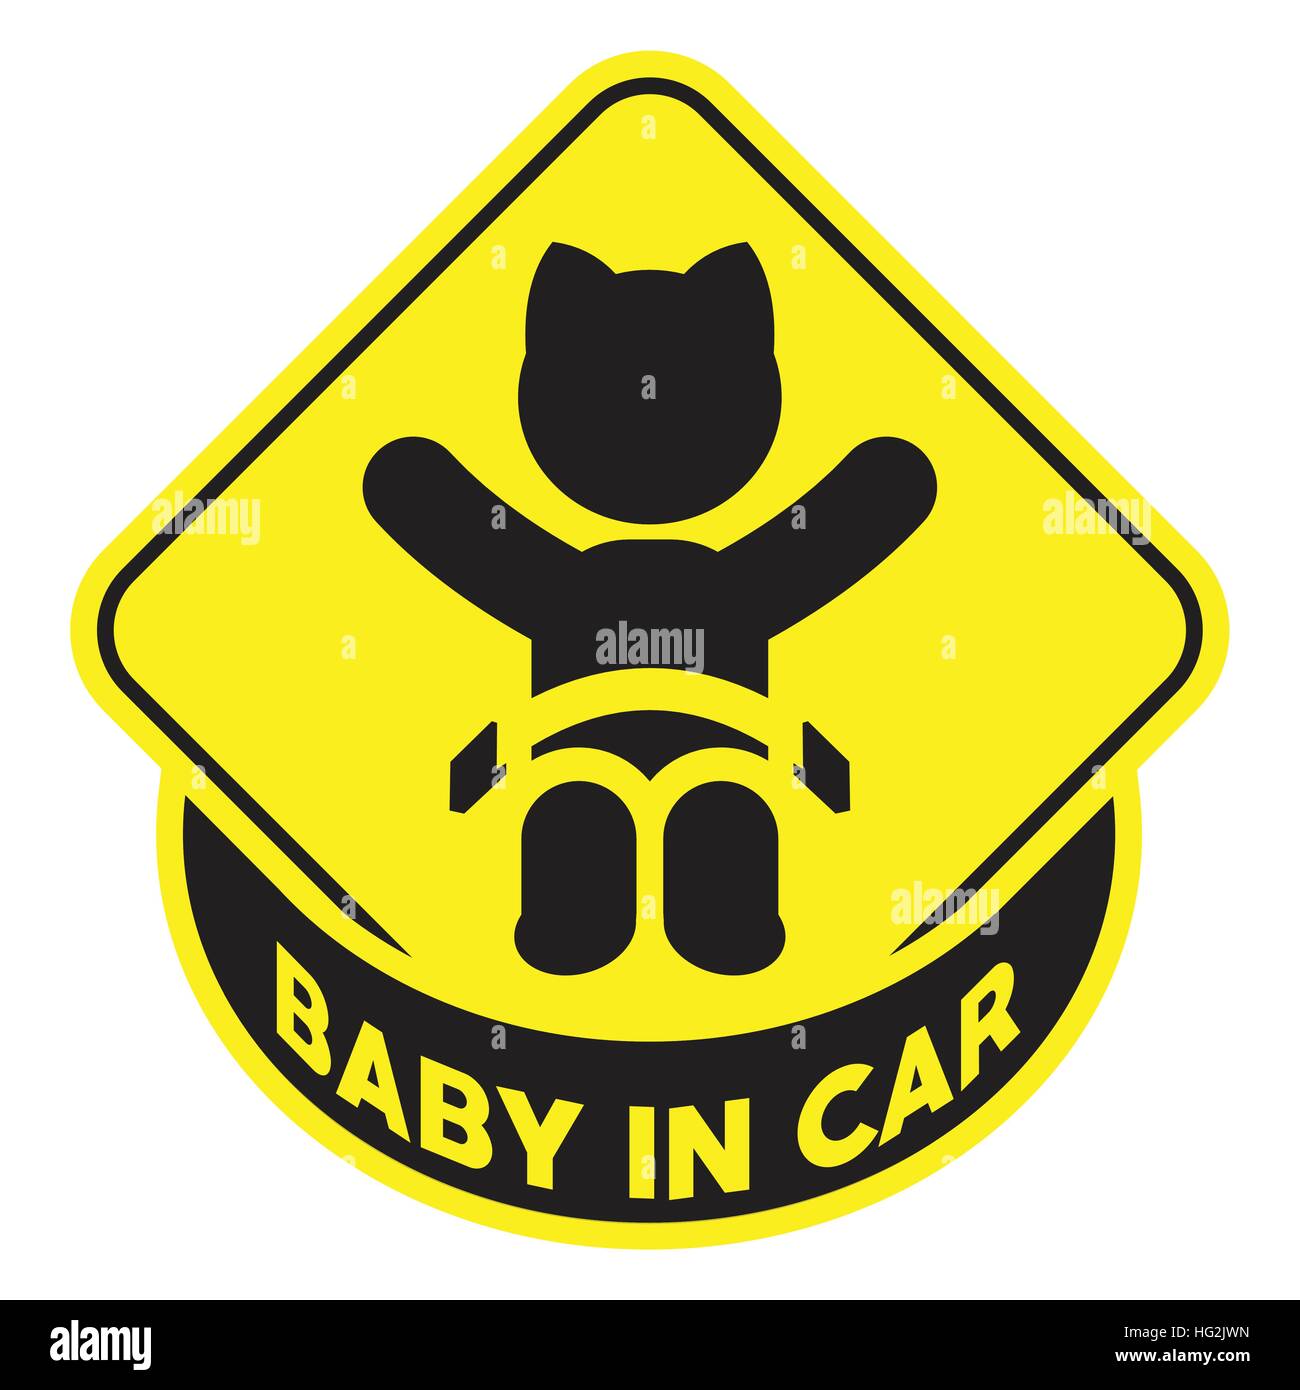 baby in car sticker Stock Vector